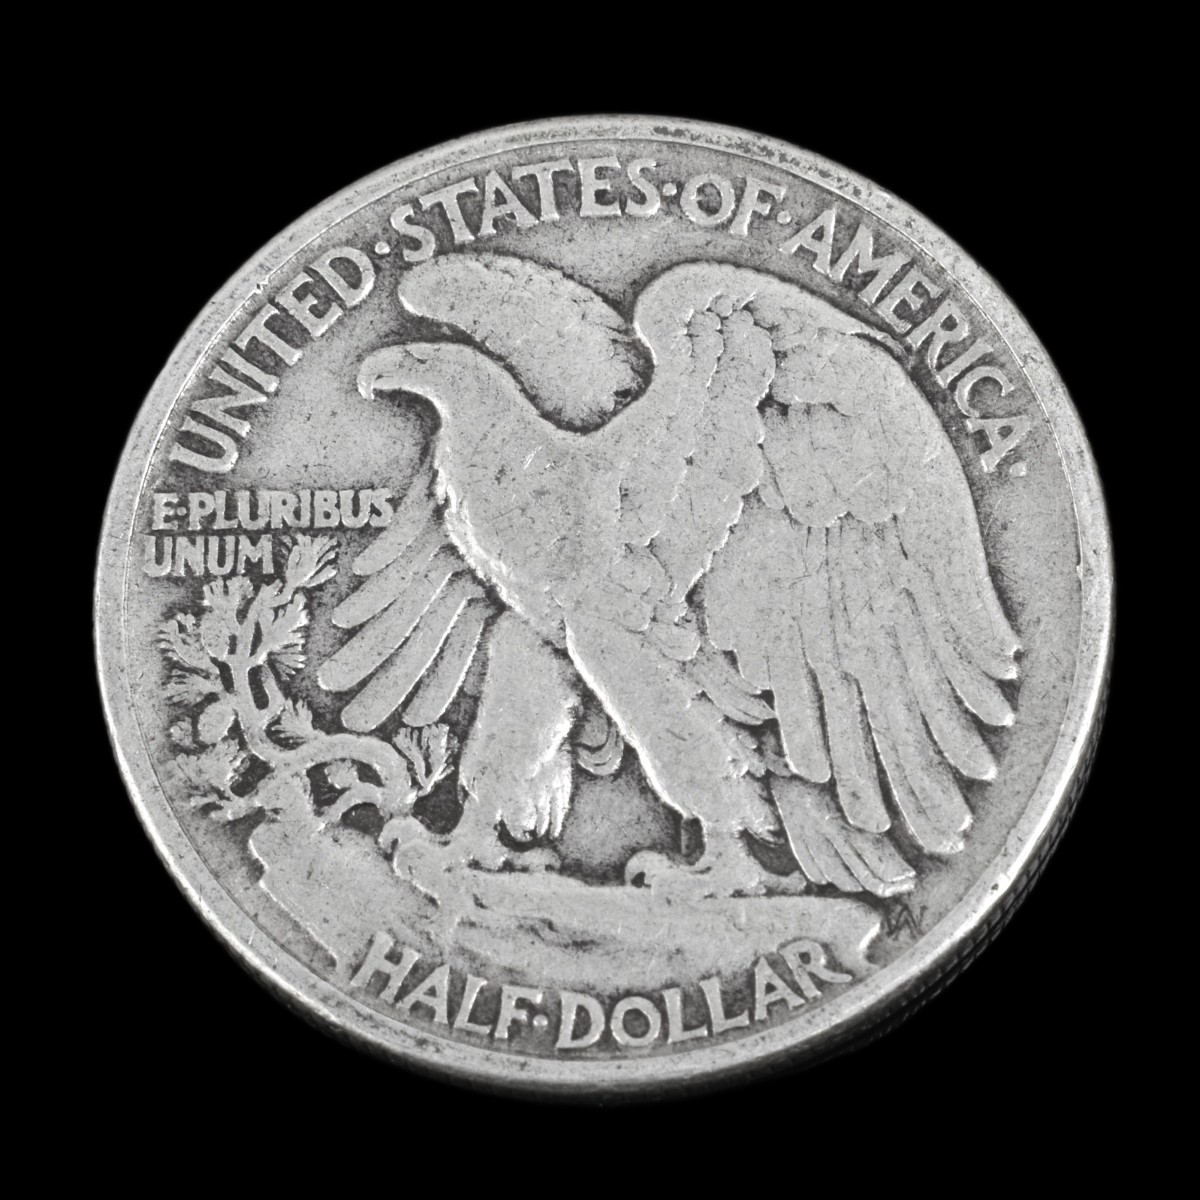 Thirteen U.S. Silver Half Dollars